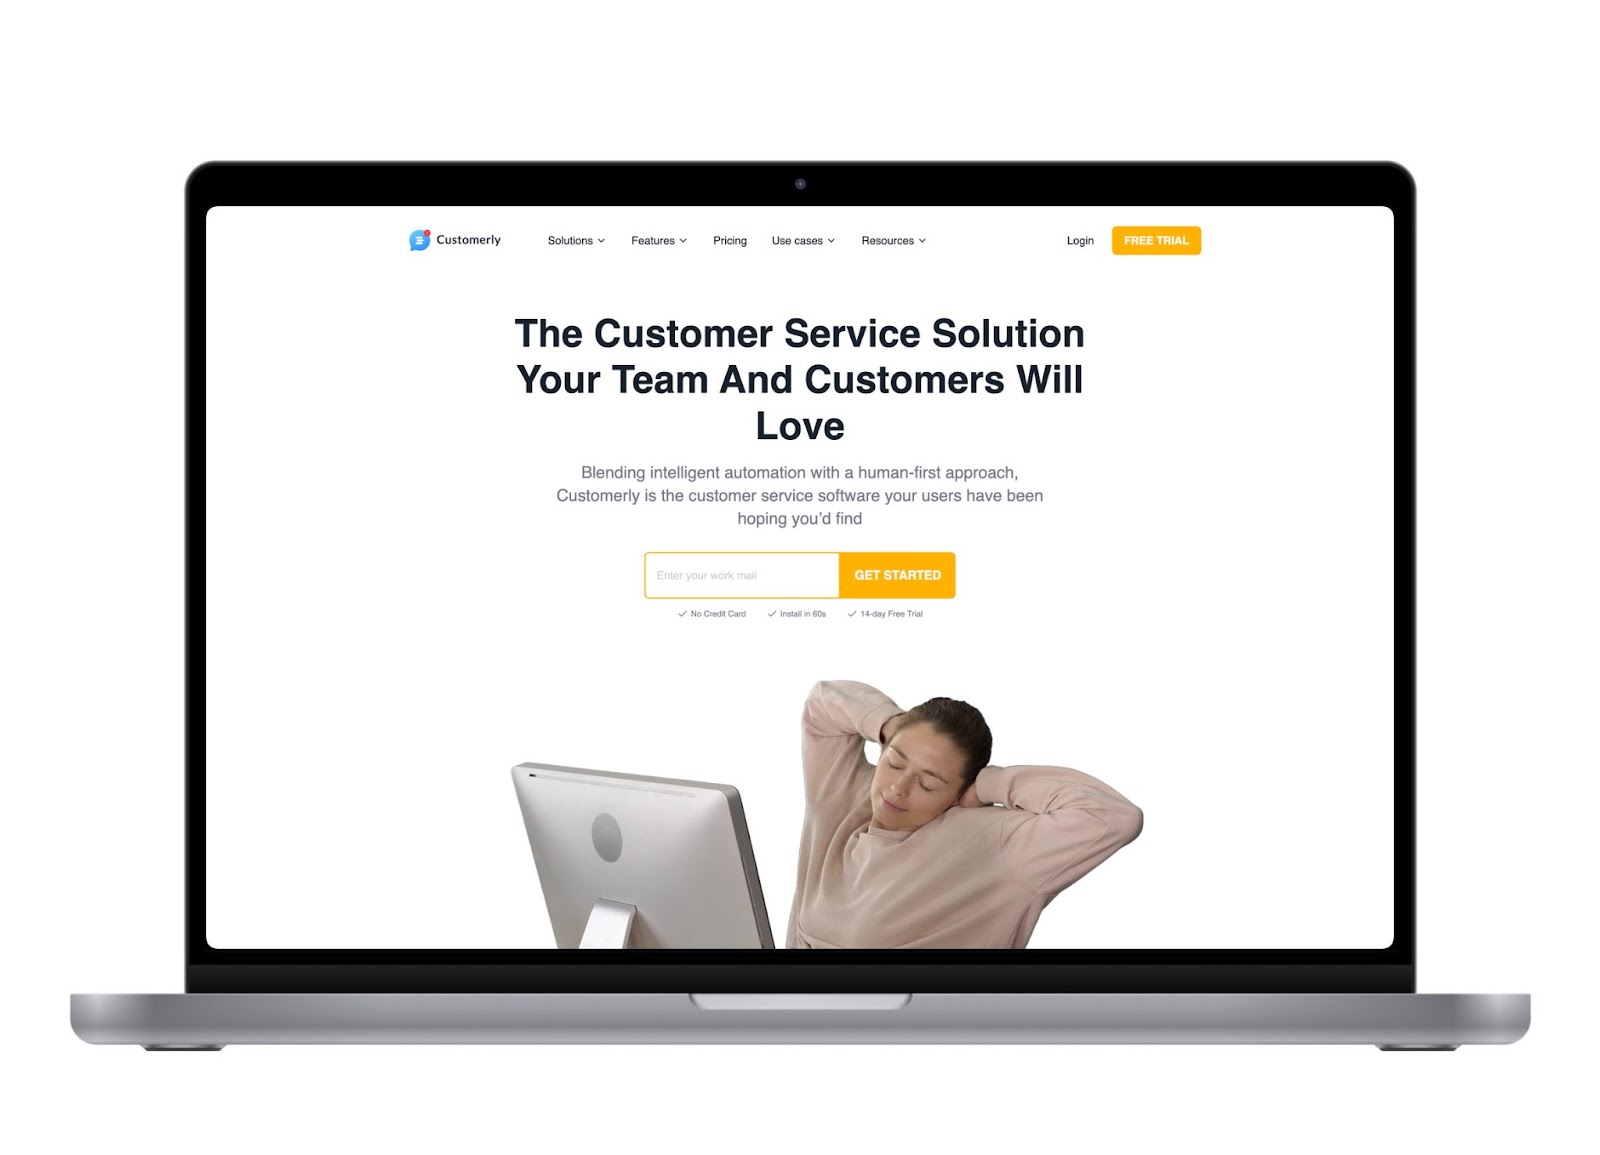 Customerly customer service software